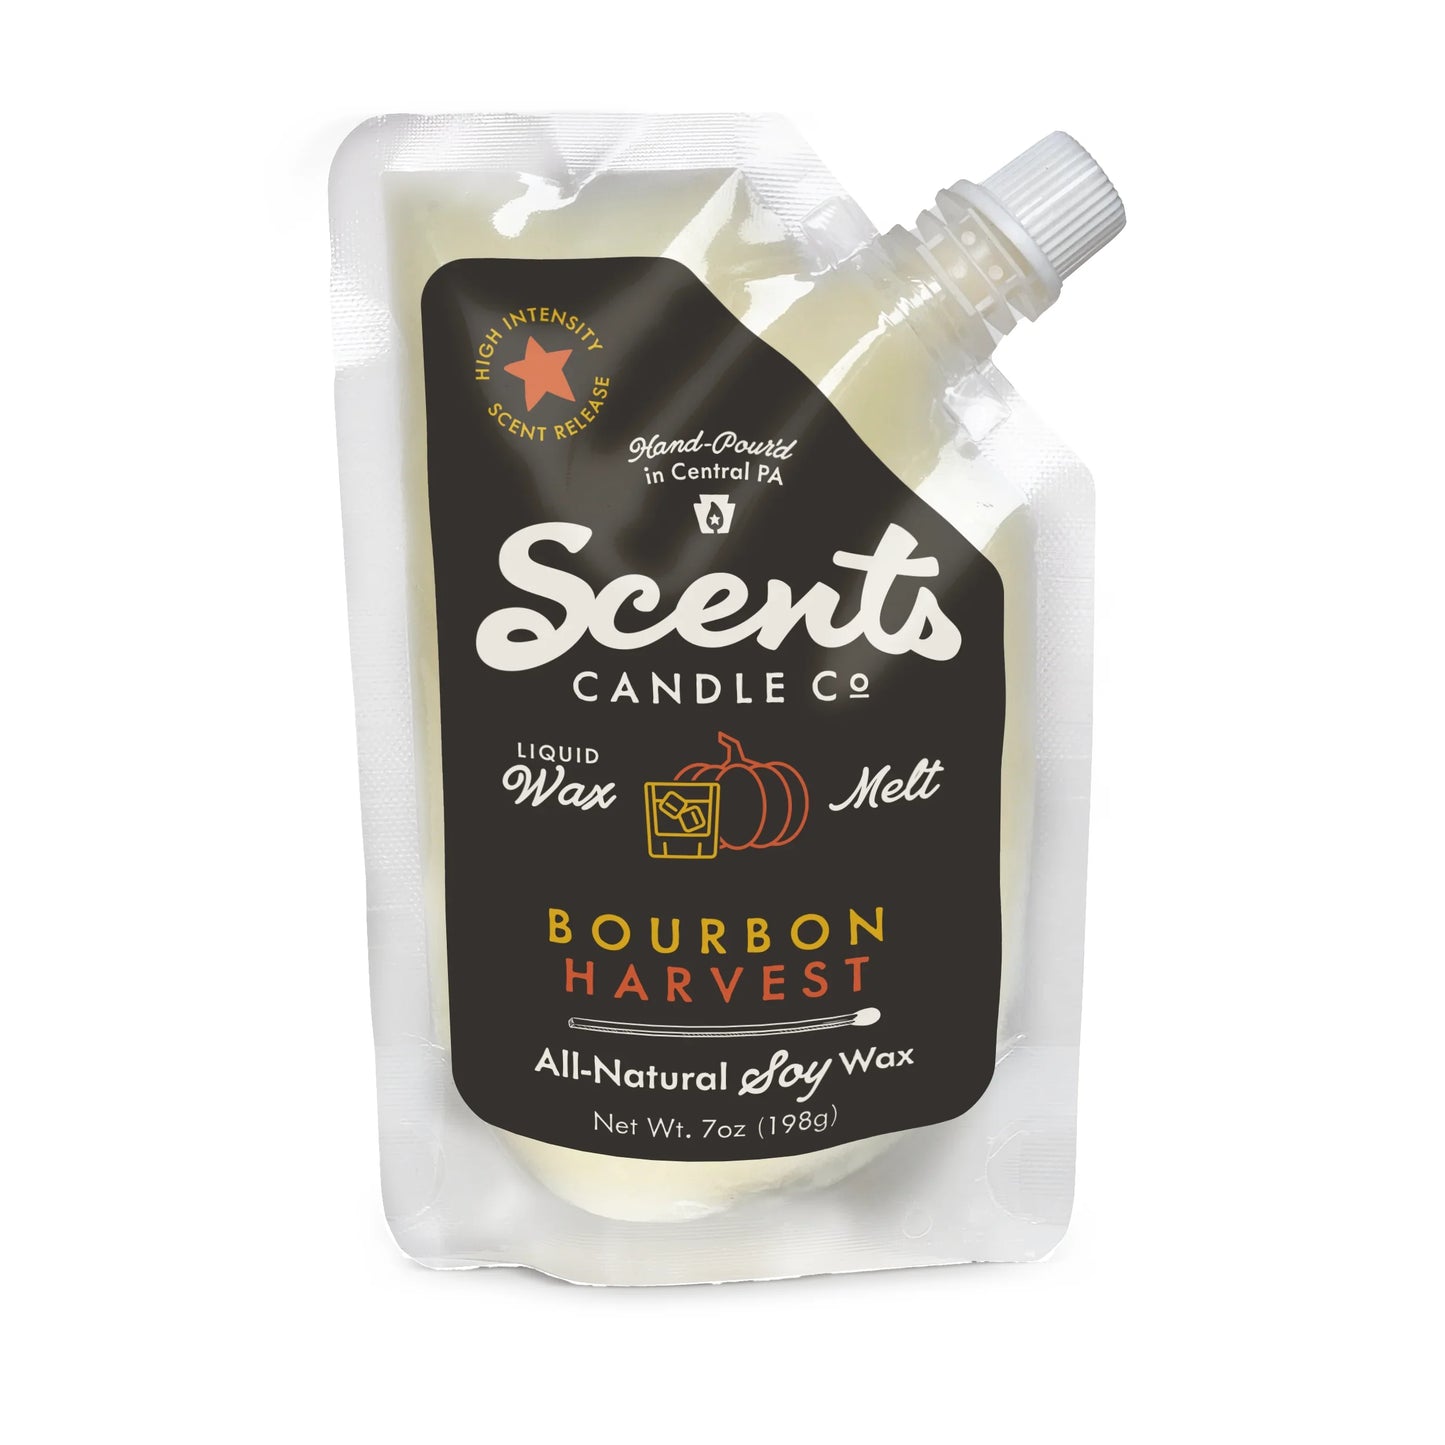 Scents Candle Co. Bourbon Harvest Liquid Wax Melt